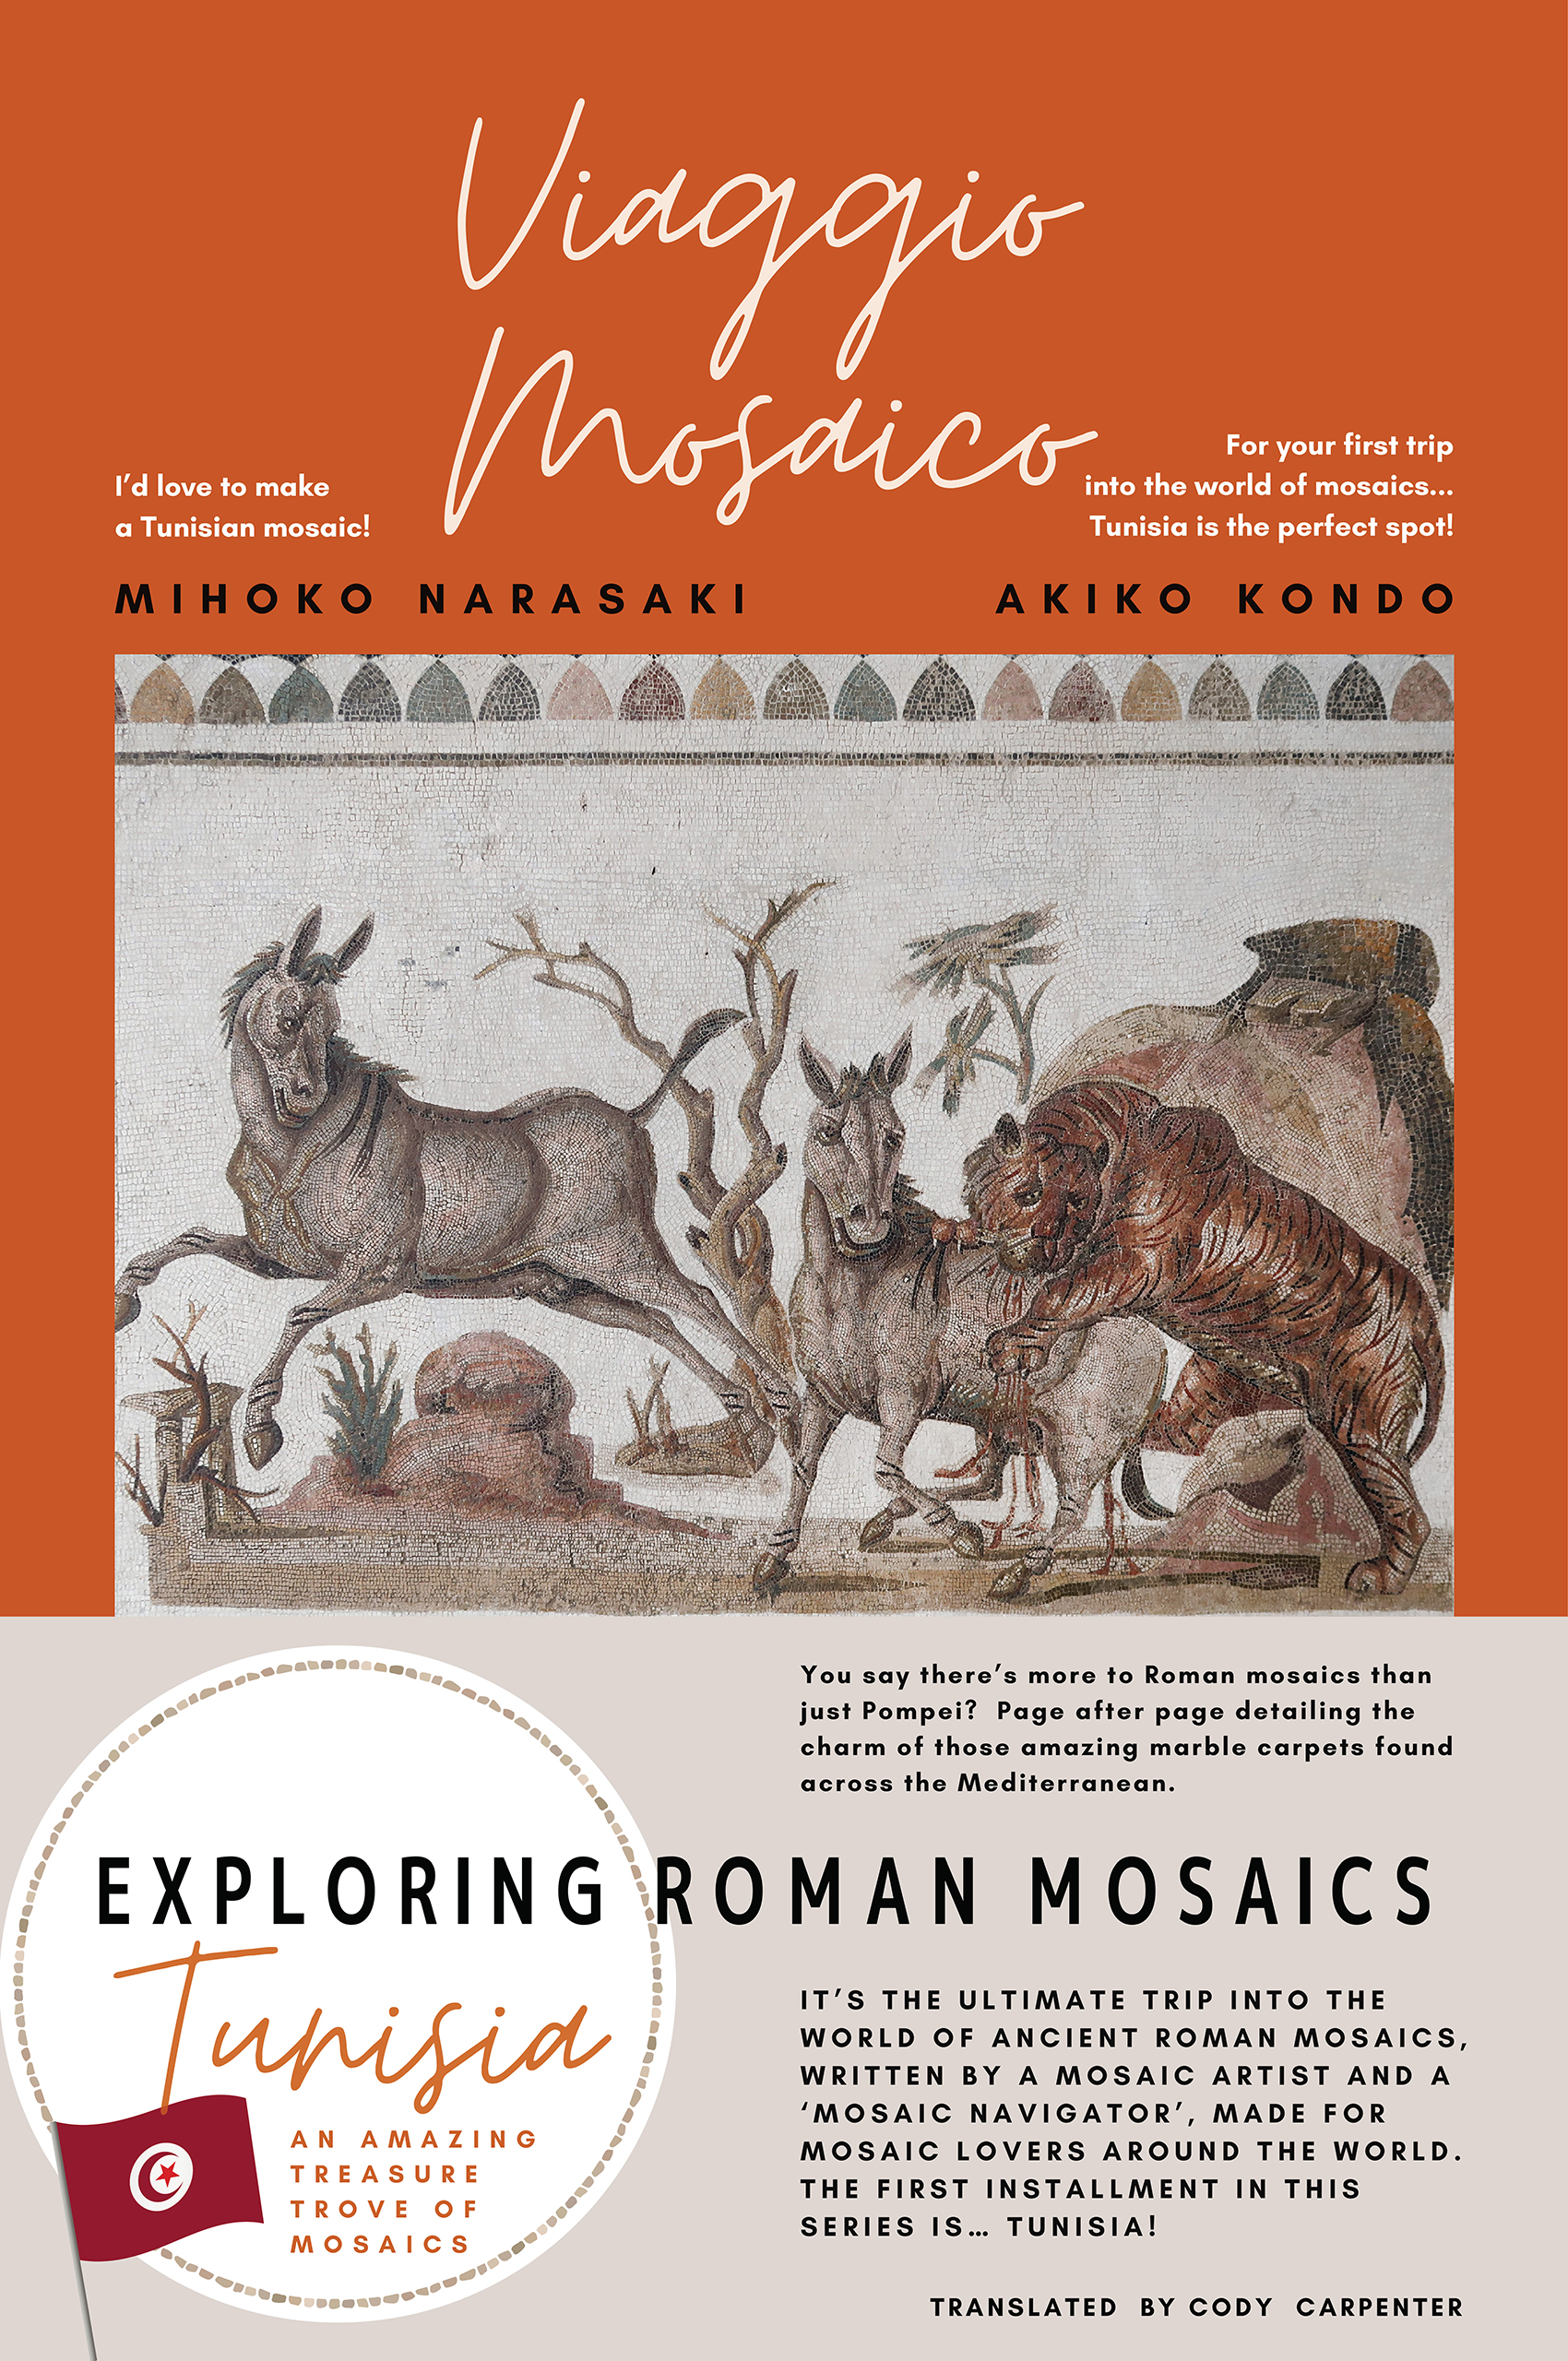 Exploring Roman Mosaics Tunisia An amazing treasure trove of